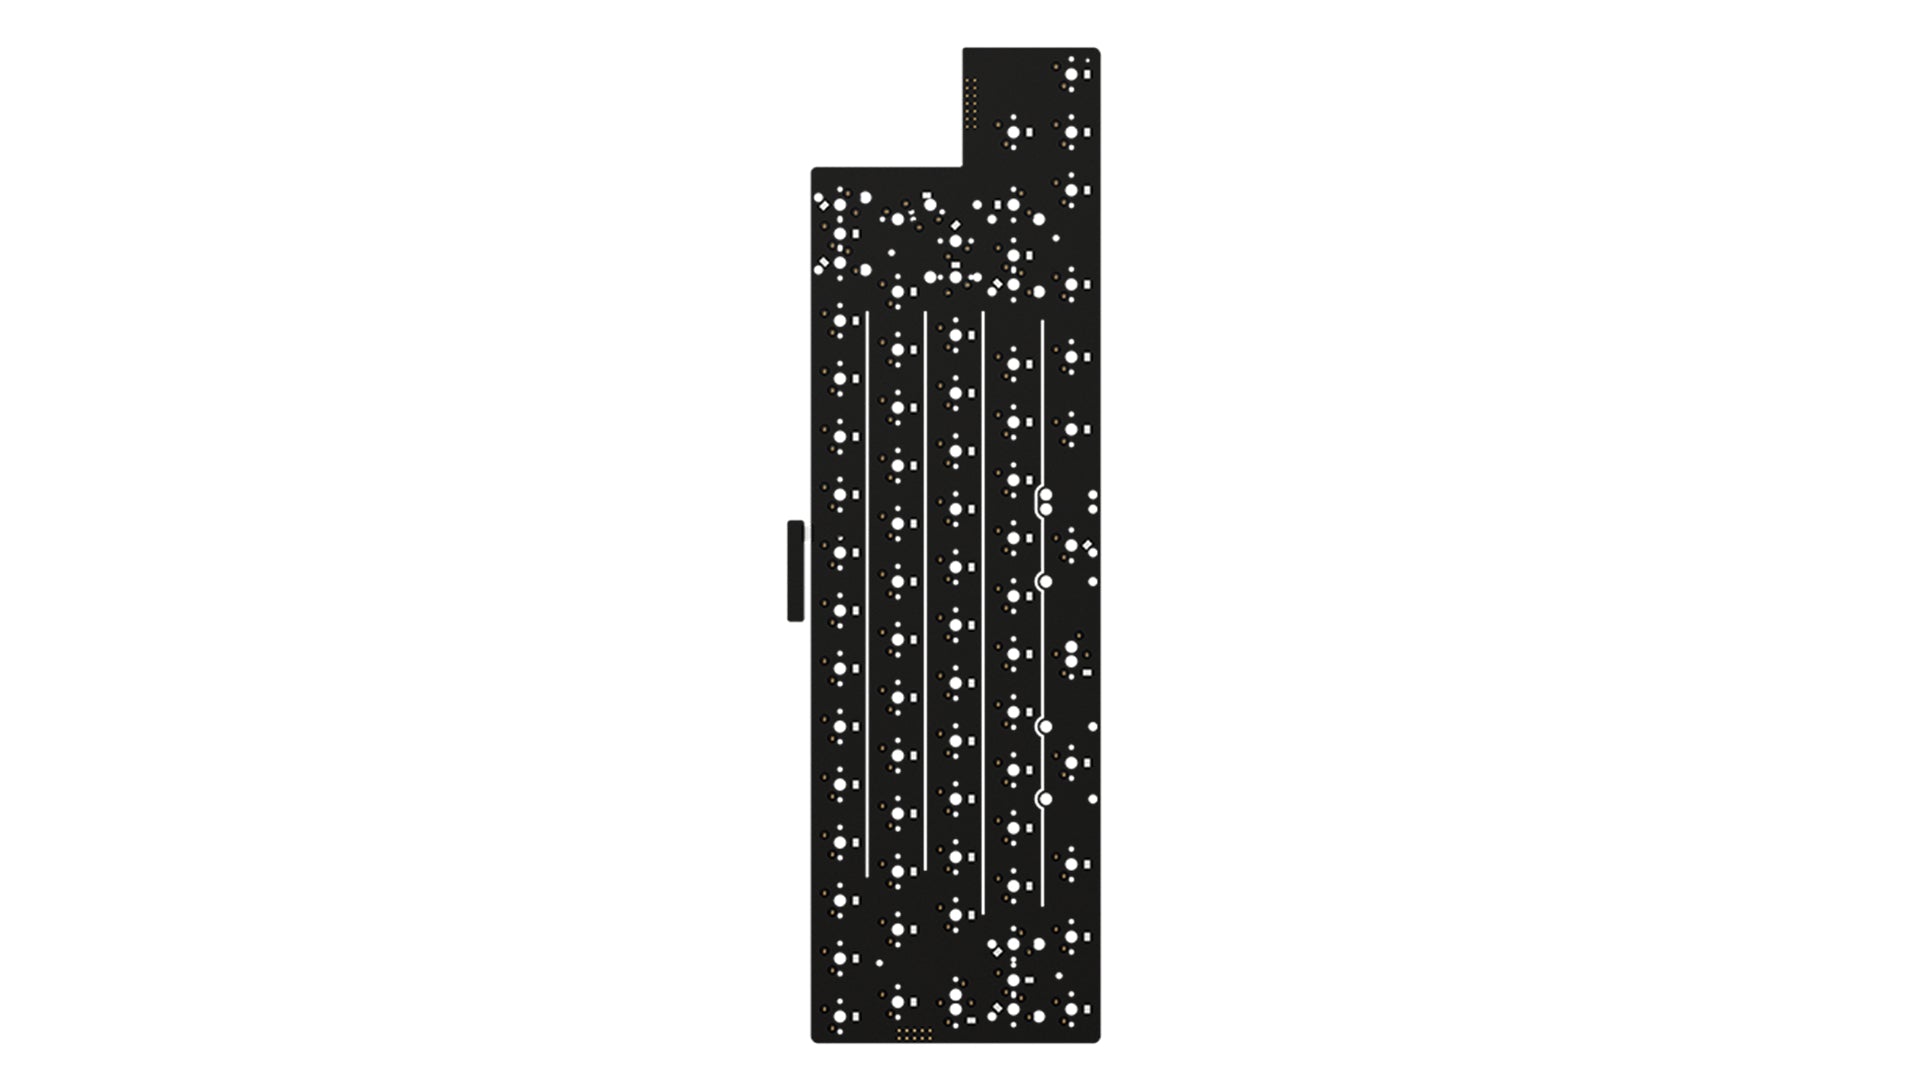 [Group-buy] Freya Keyboard - Extra PCB